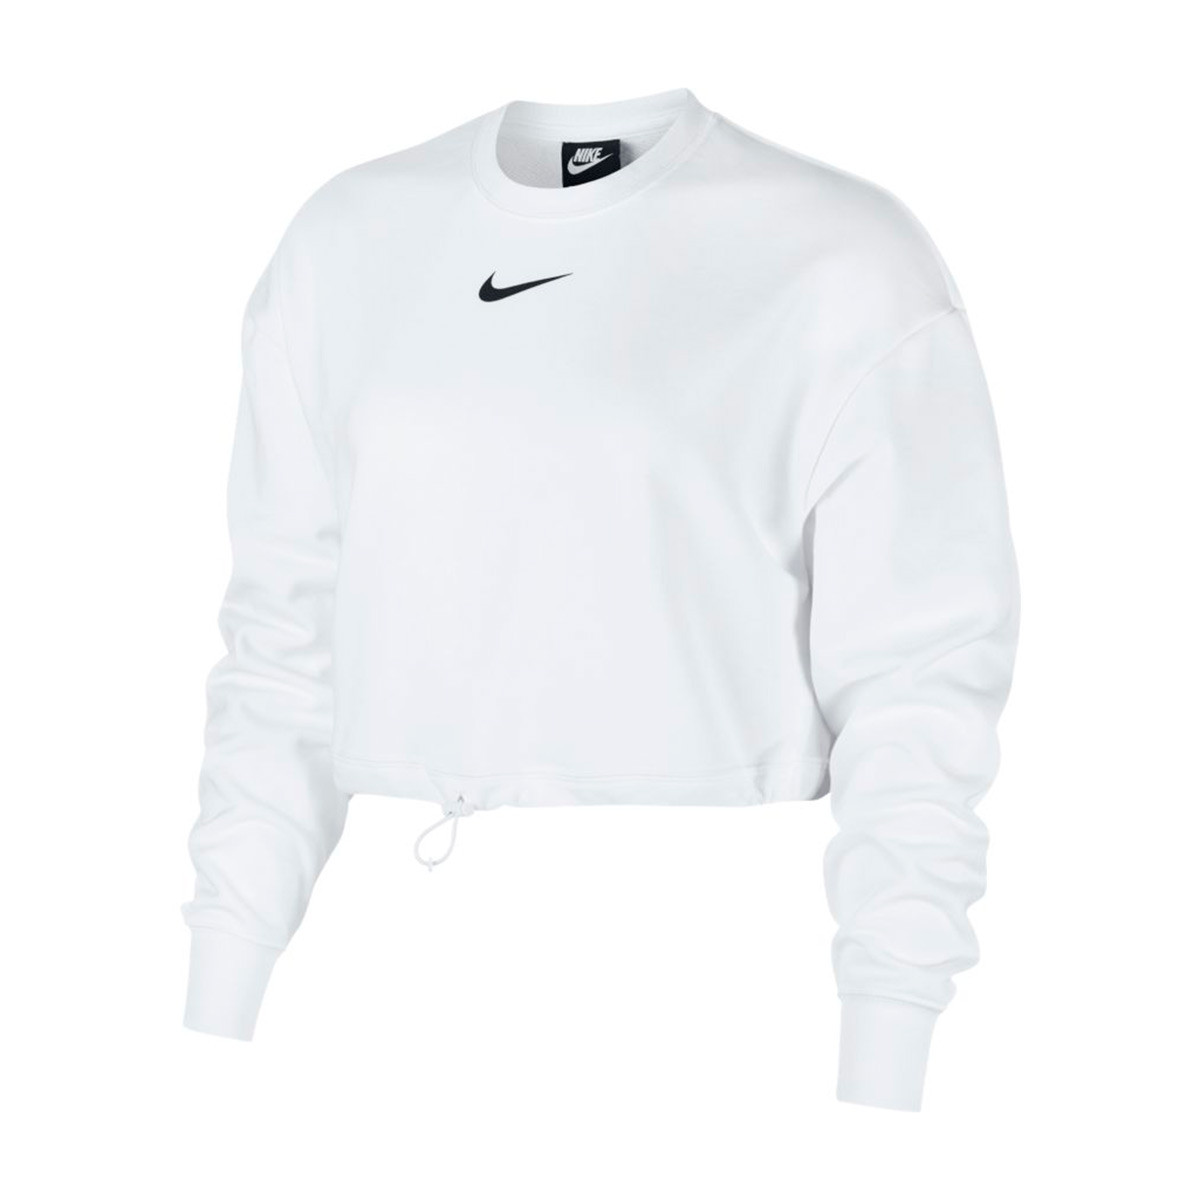 all white nike sweater